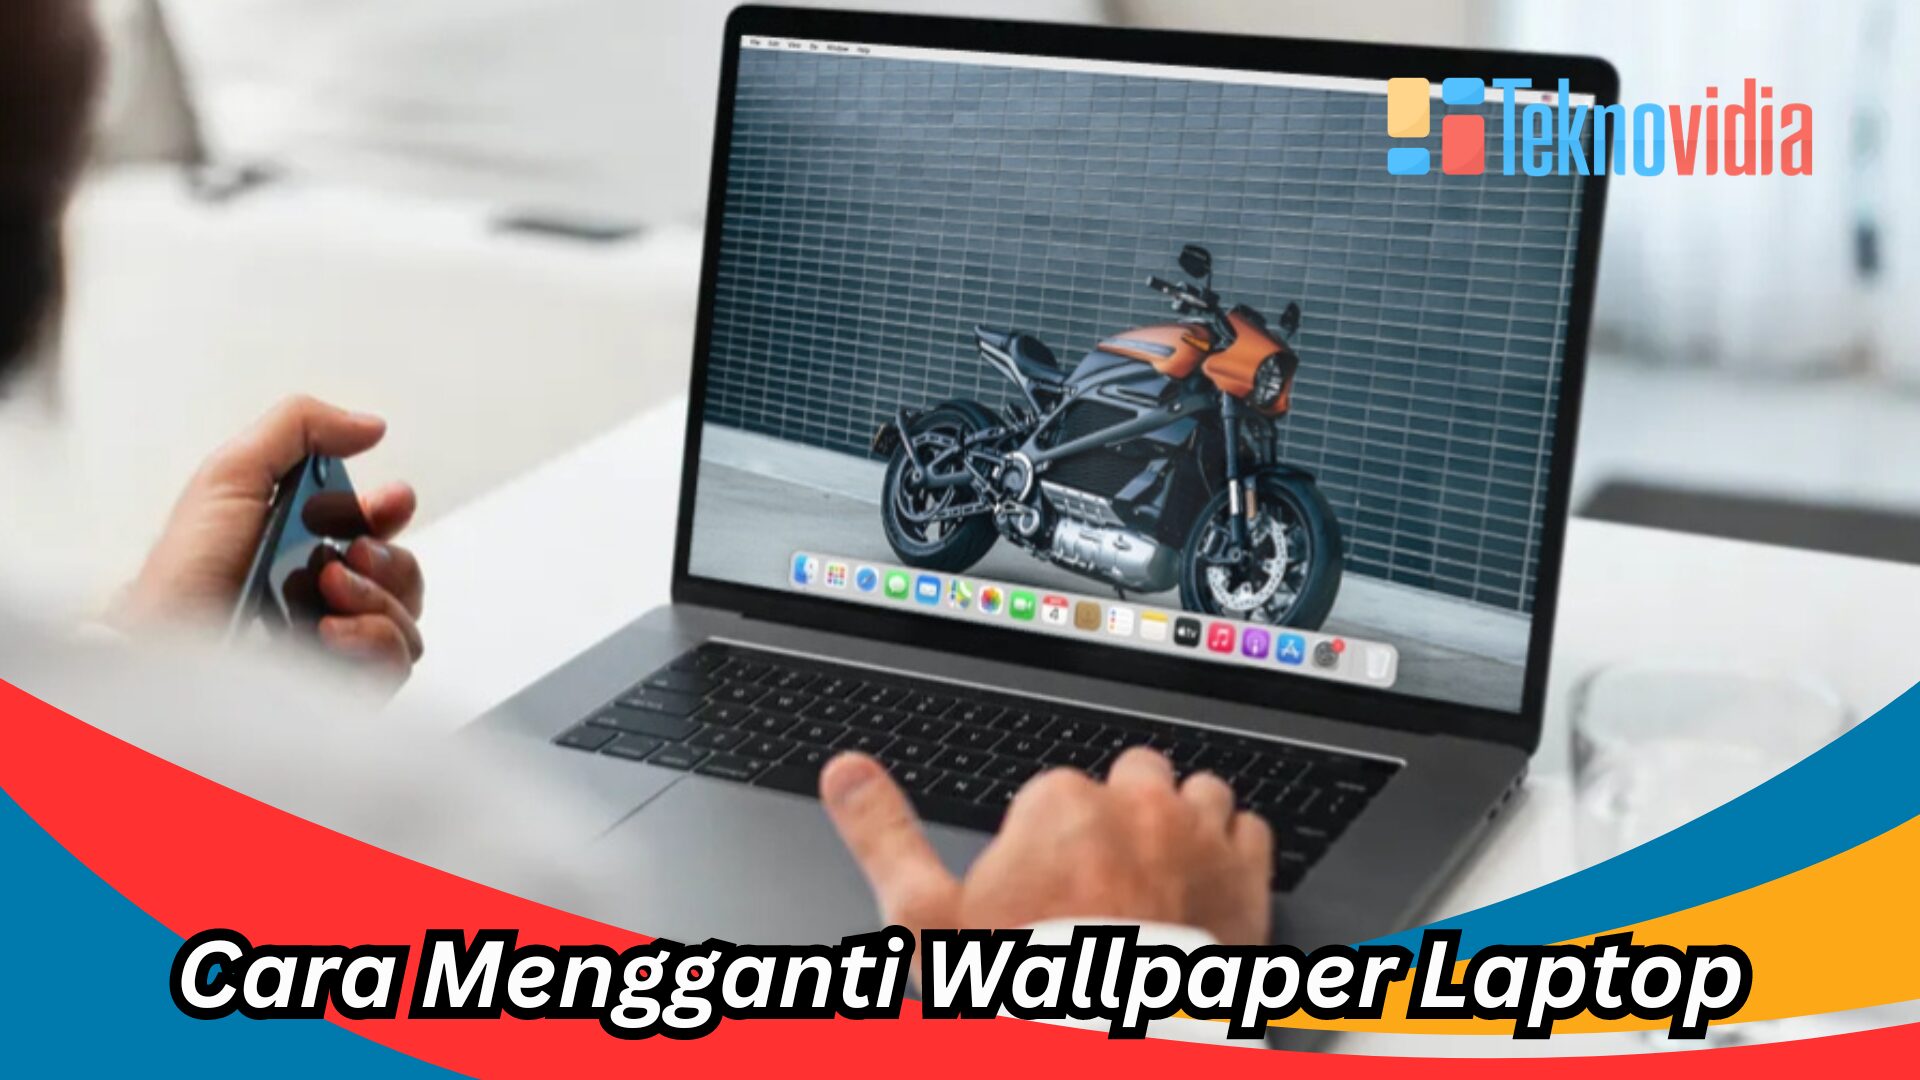 Cara Mengganti Wallpaper Laptop